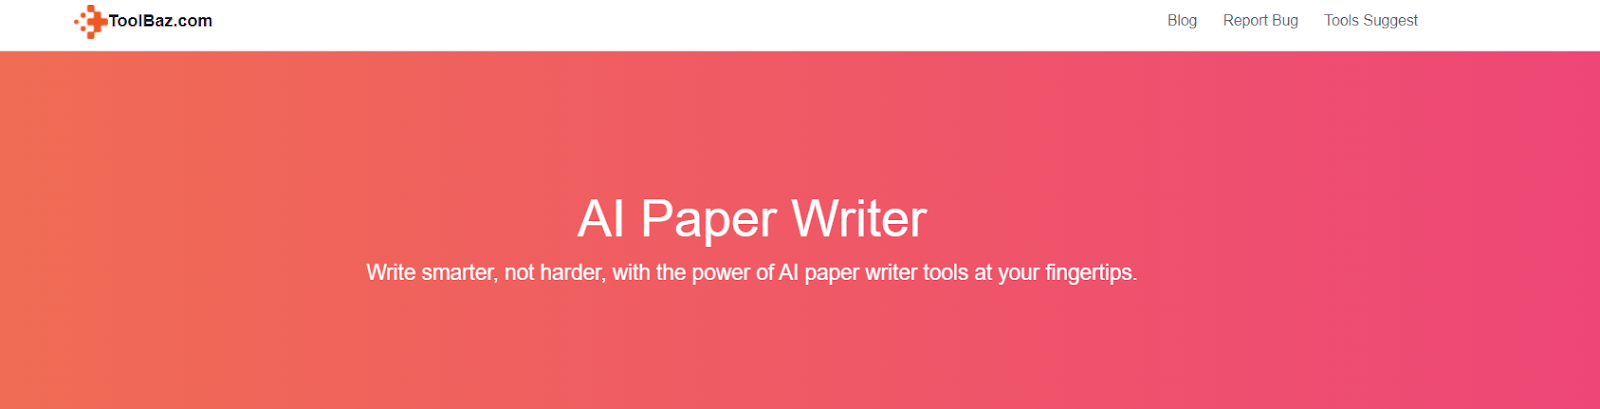 ToolBaz AI Paper Writer